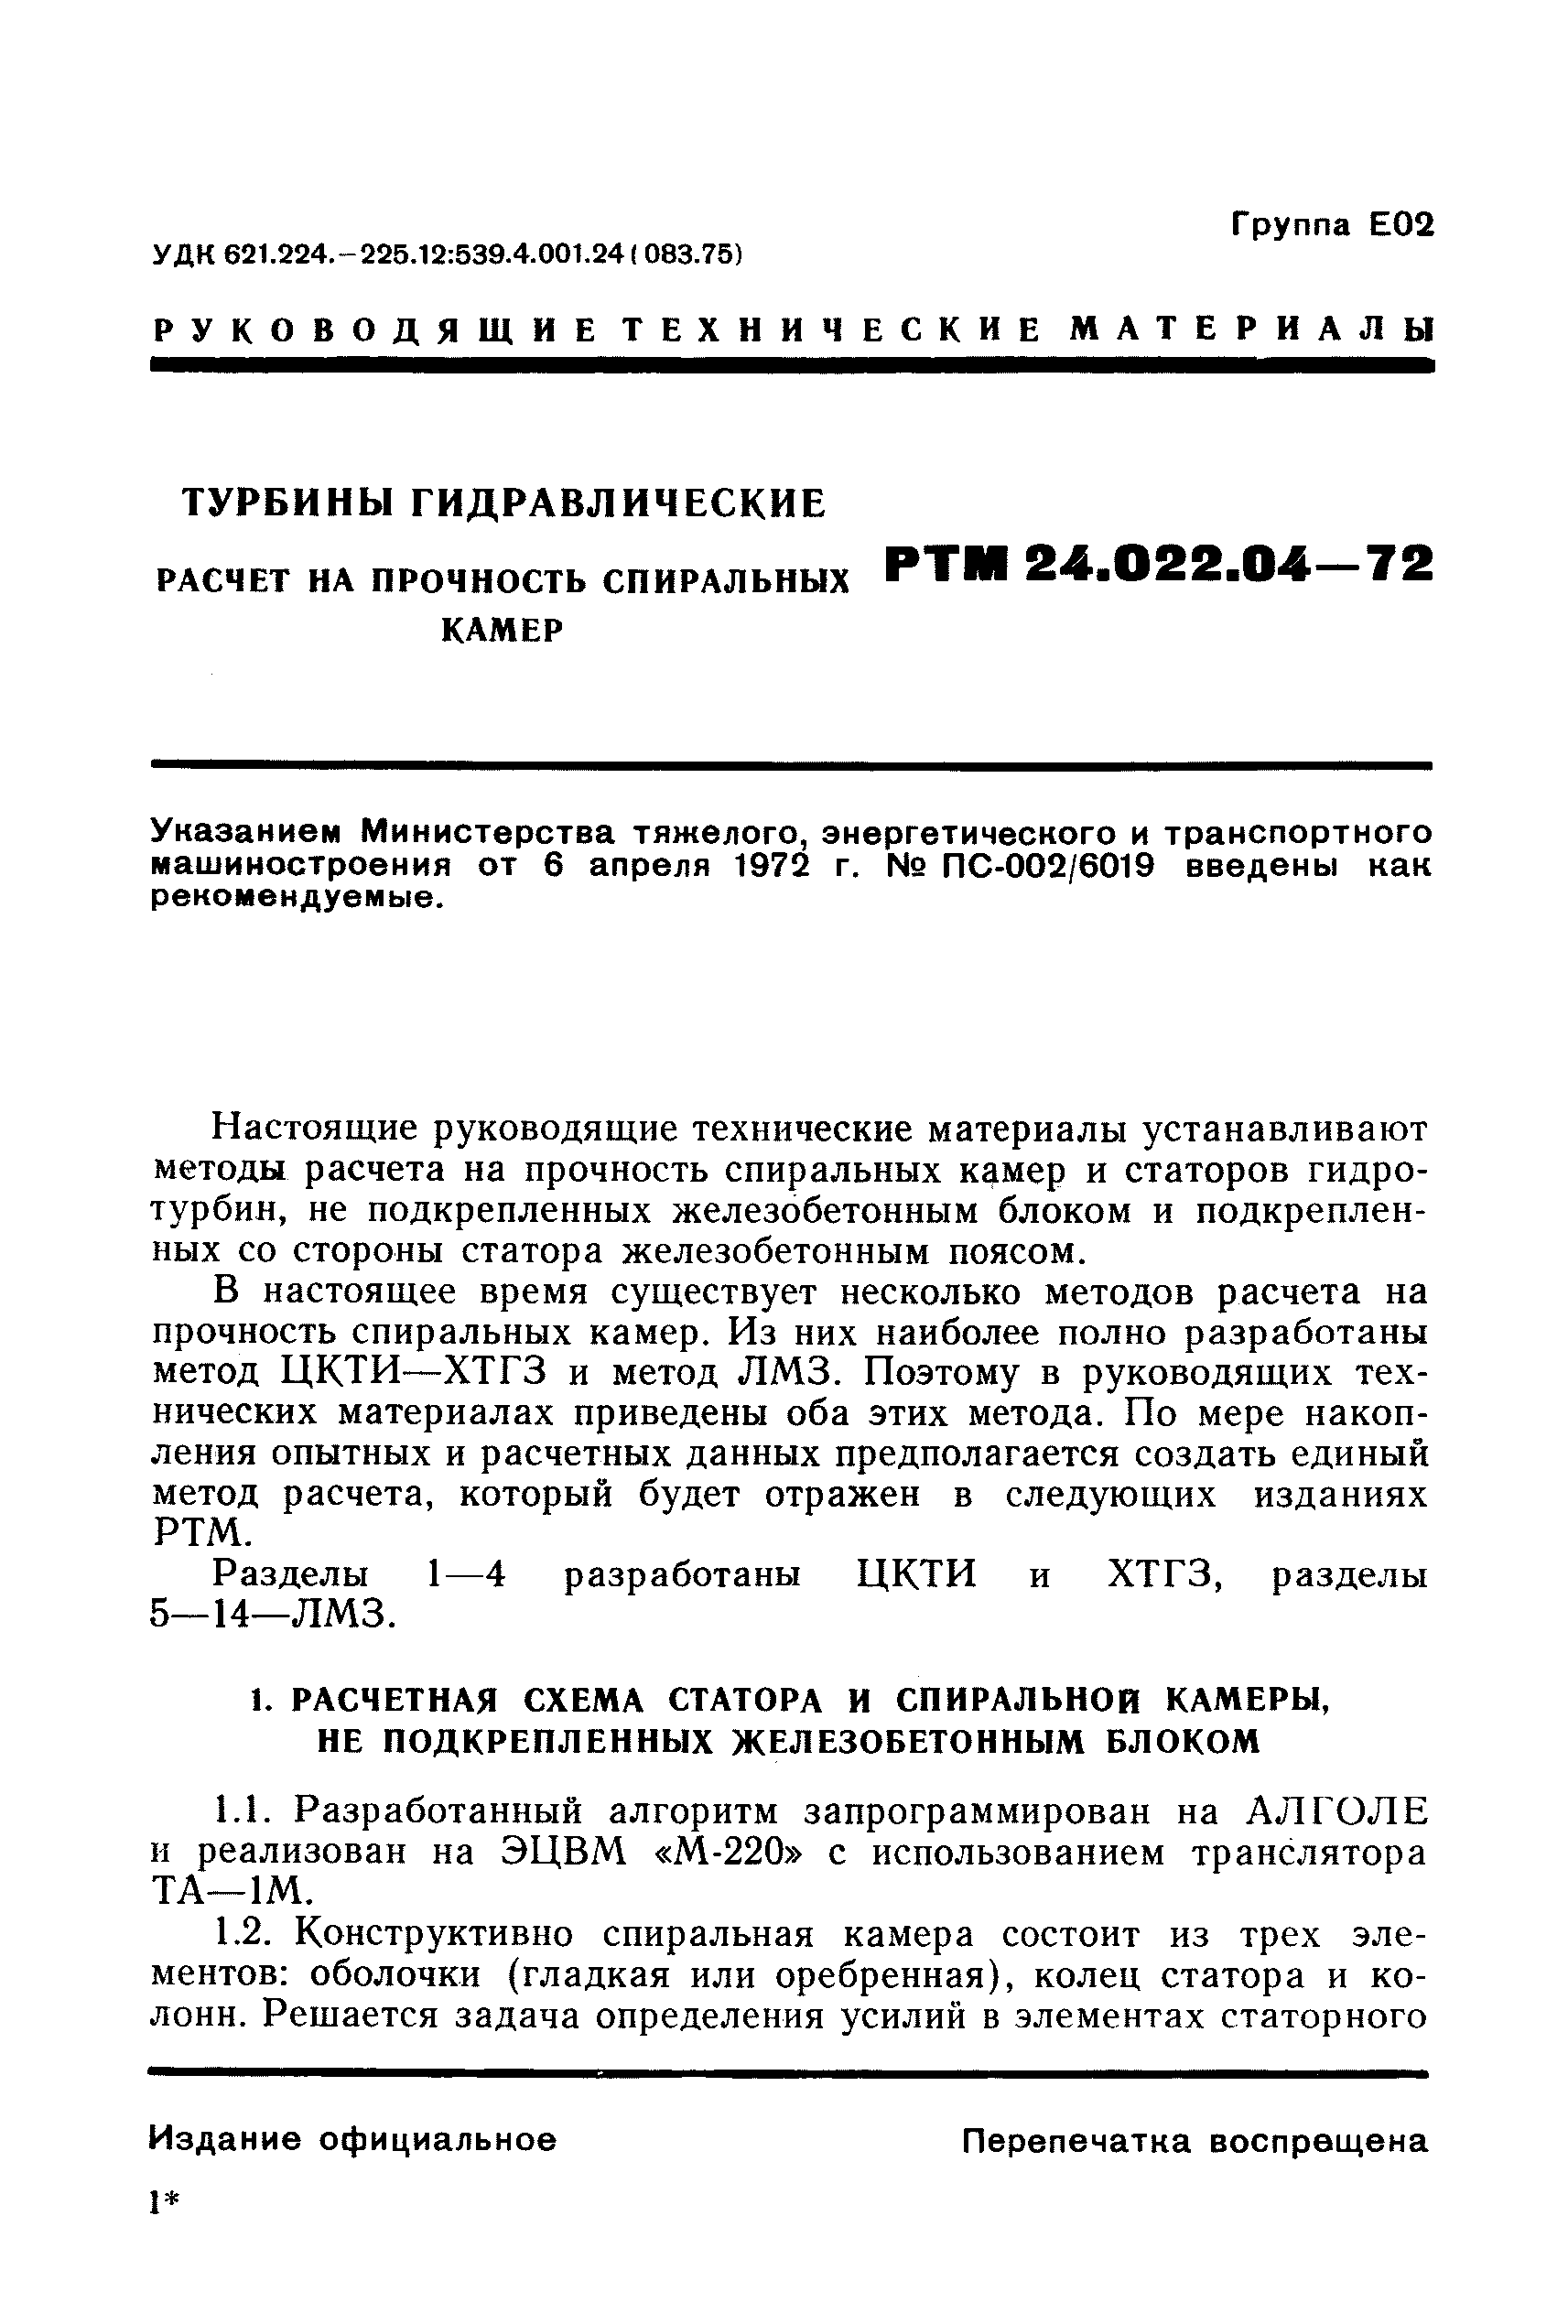 РТМ 24.022.04-72